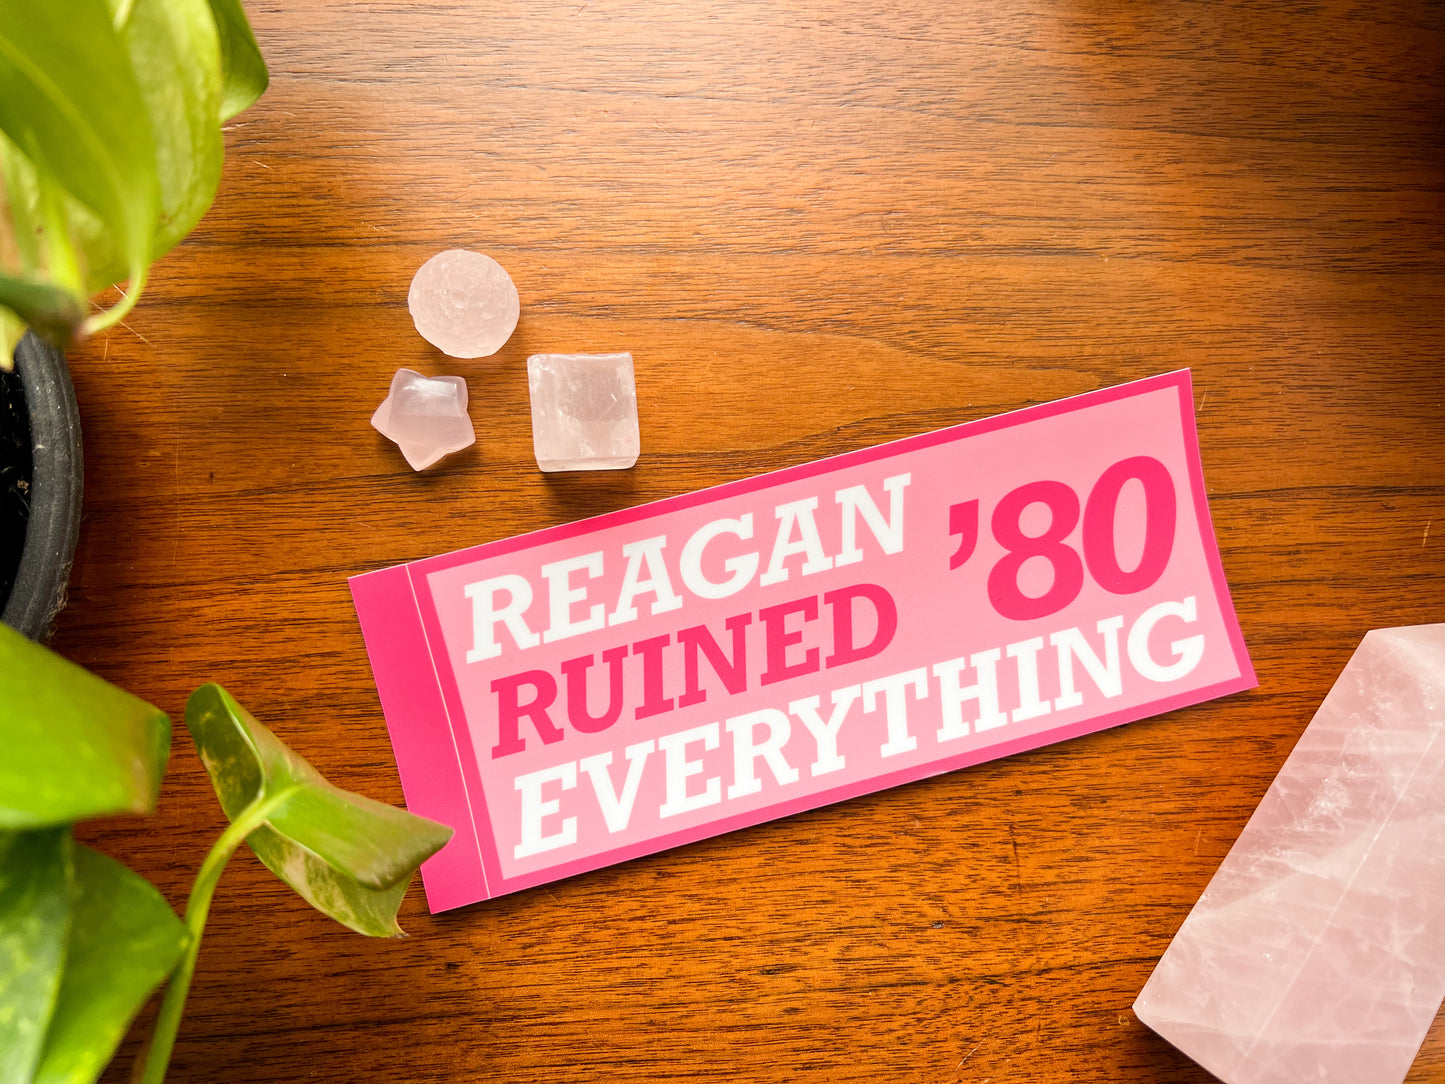 reagan ruined everything sticker